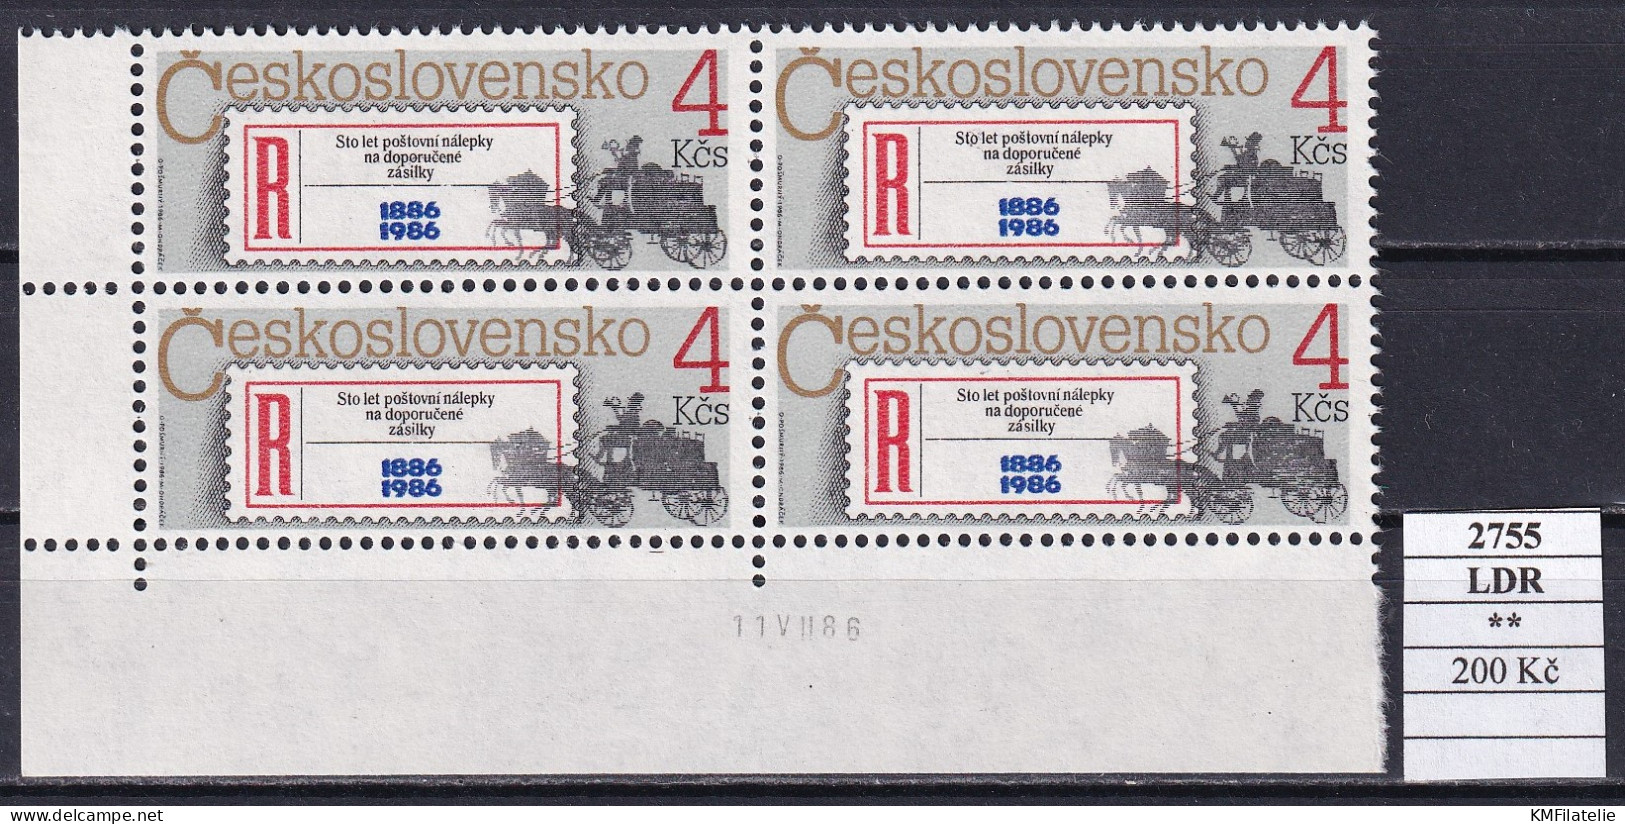 Czechoslovakia Pofis 2755 LDR MNH - Unused Stamps